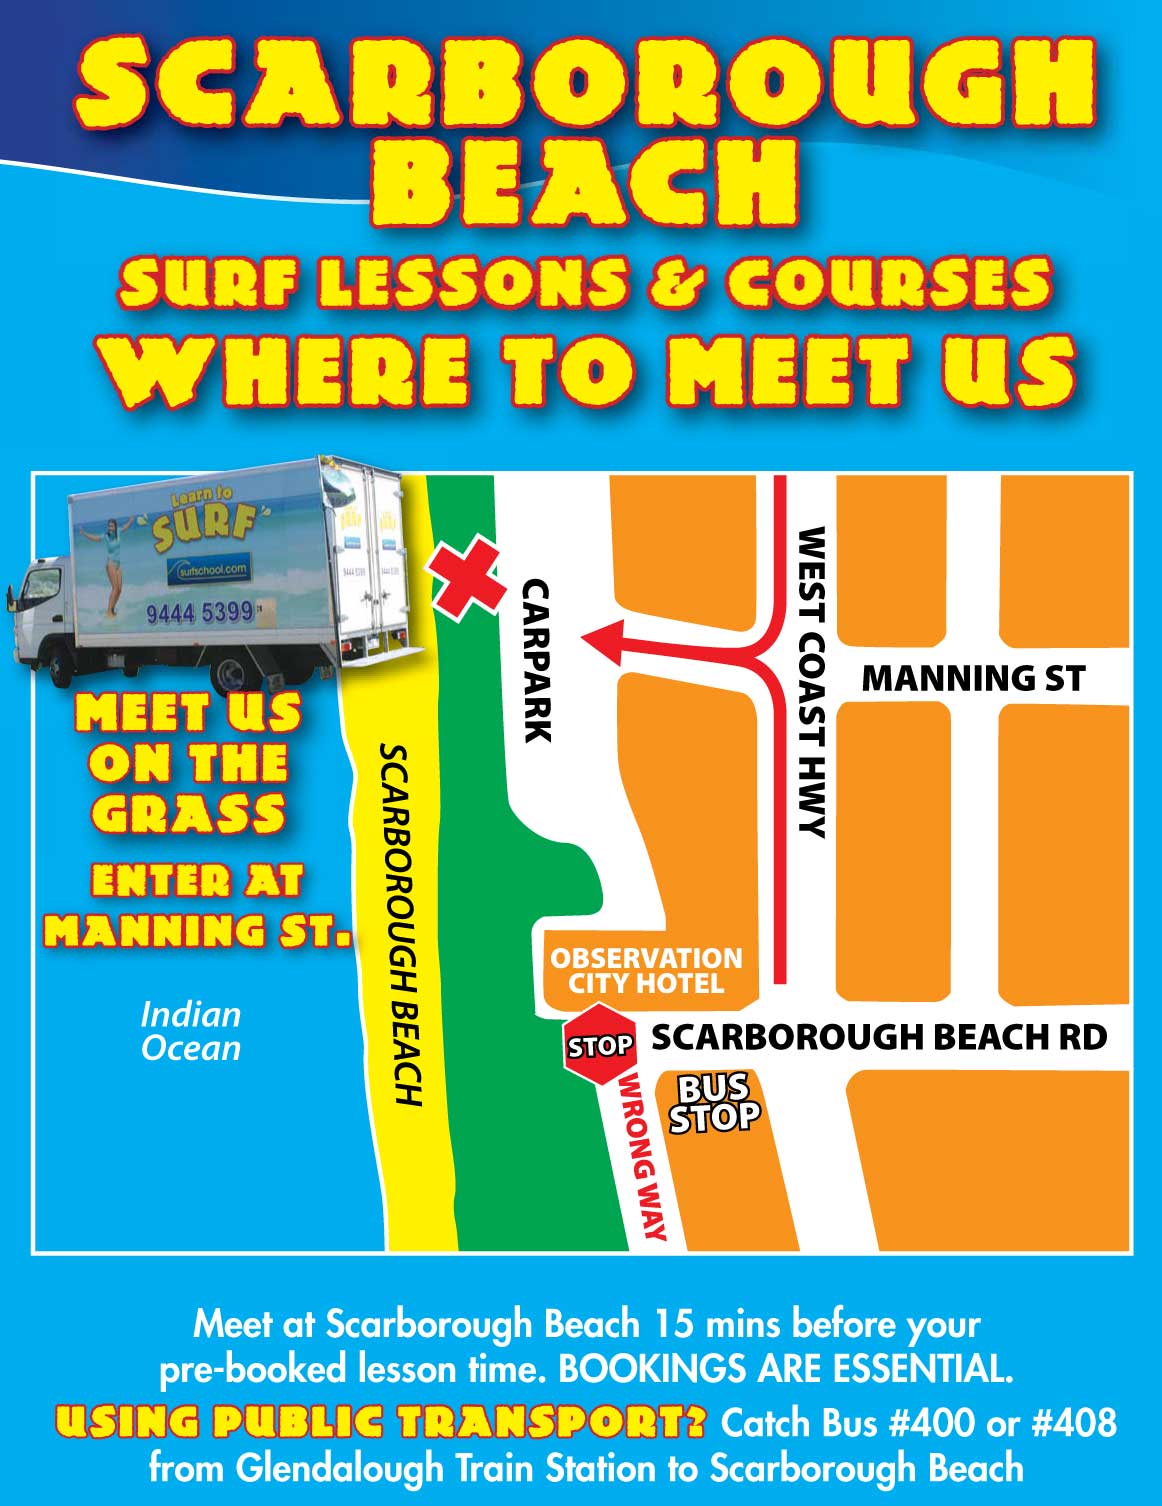 Scarborough Beach map